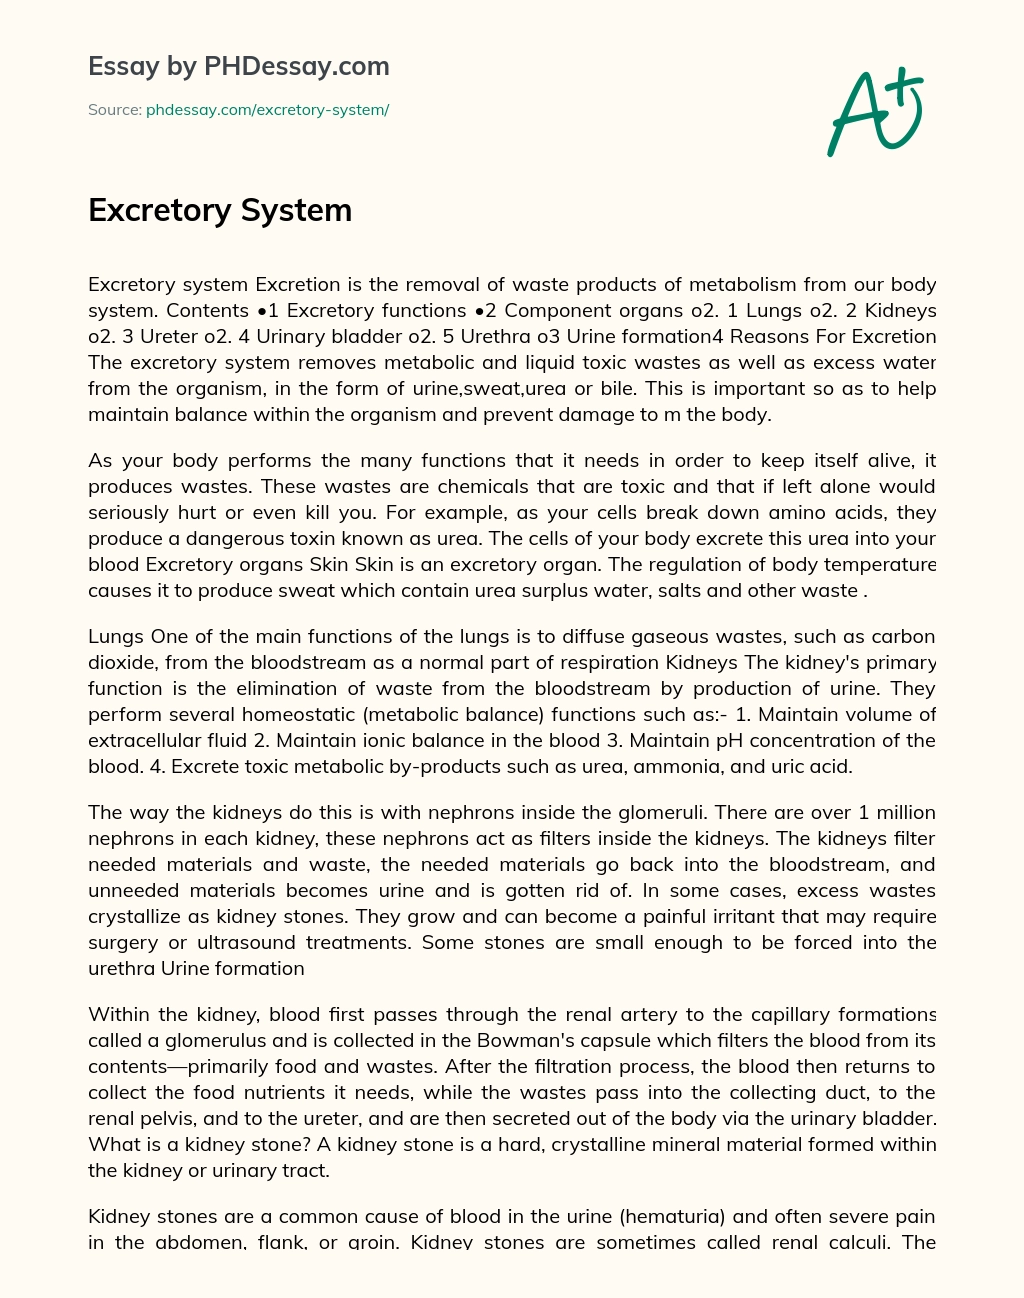 Excretory System essay